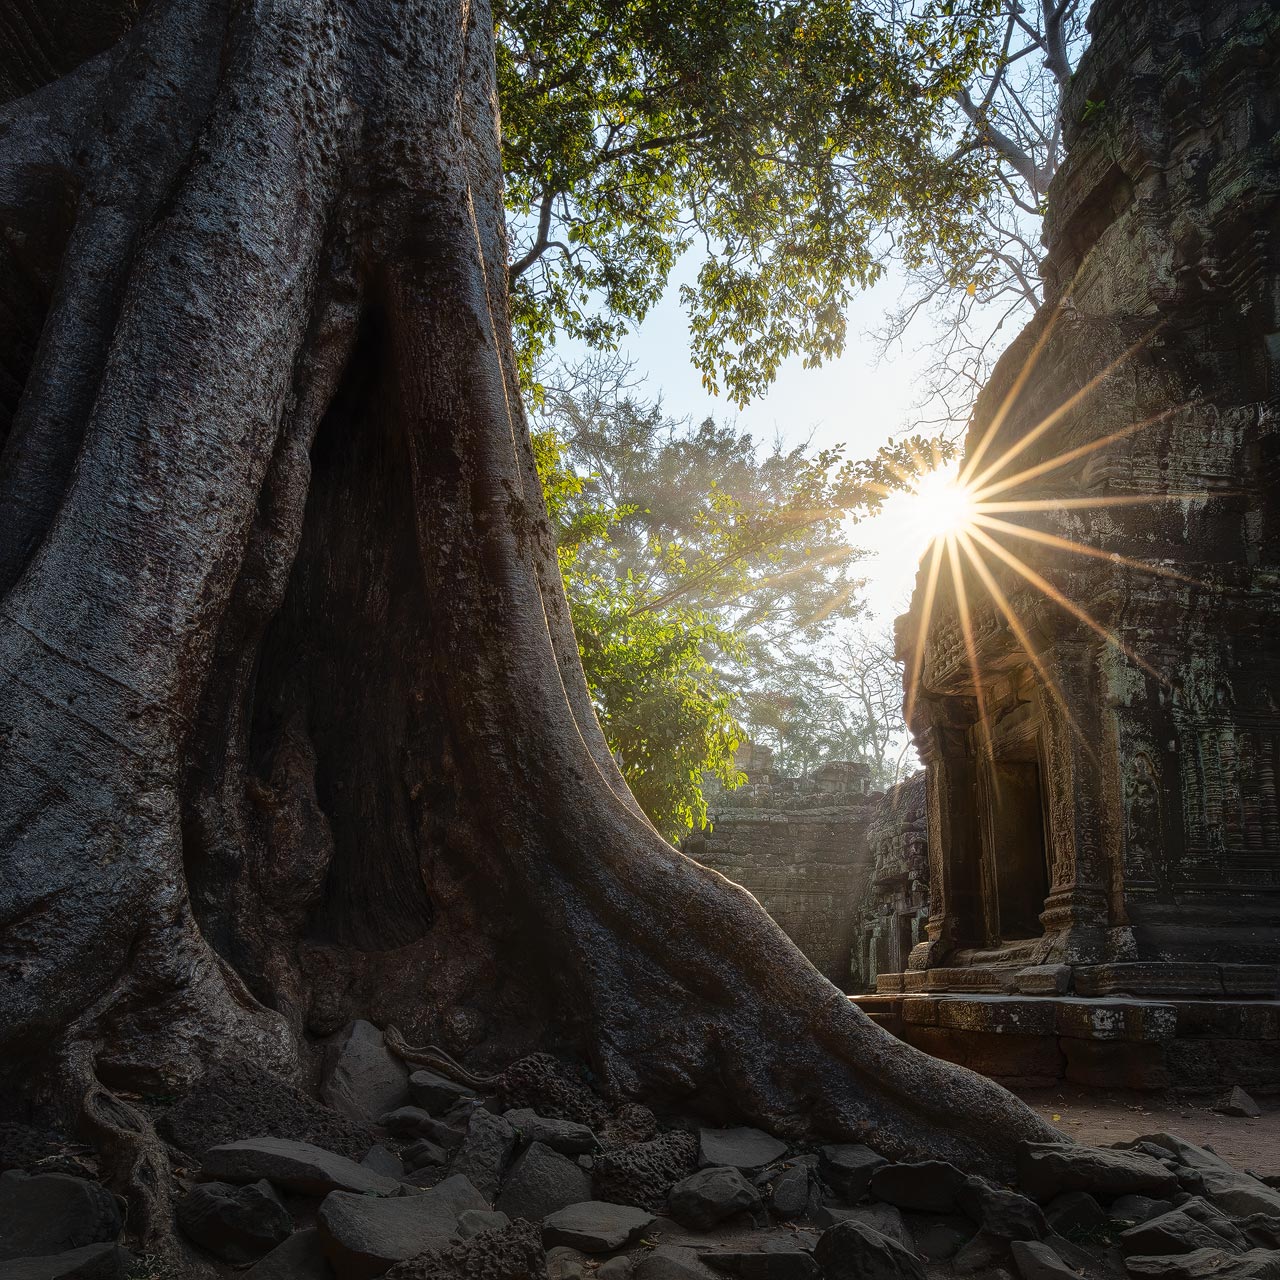 The morning sun illuminates the ancient temple of Ta Prohm in Cambodia